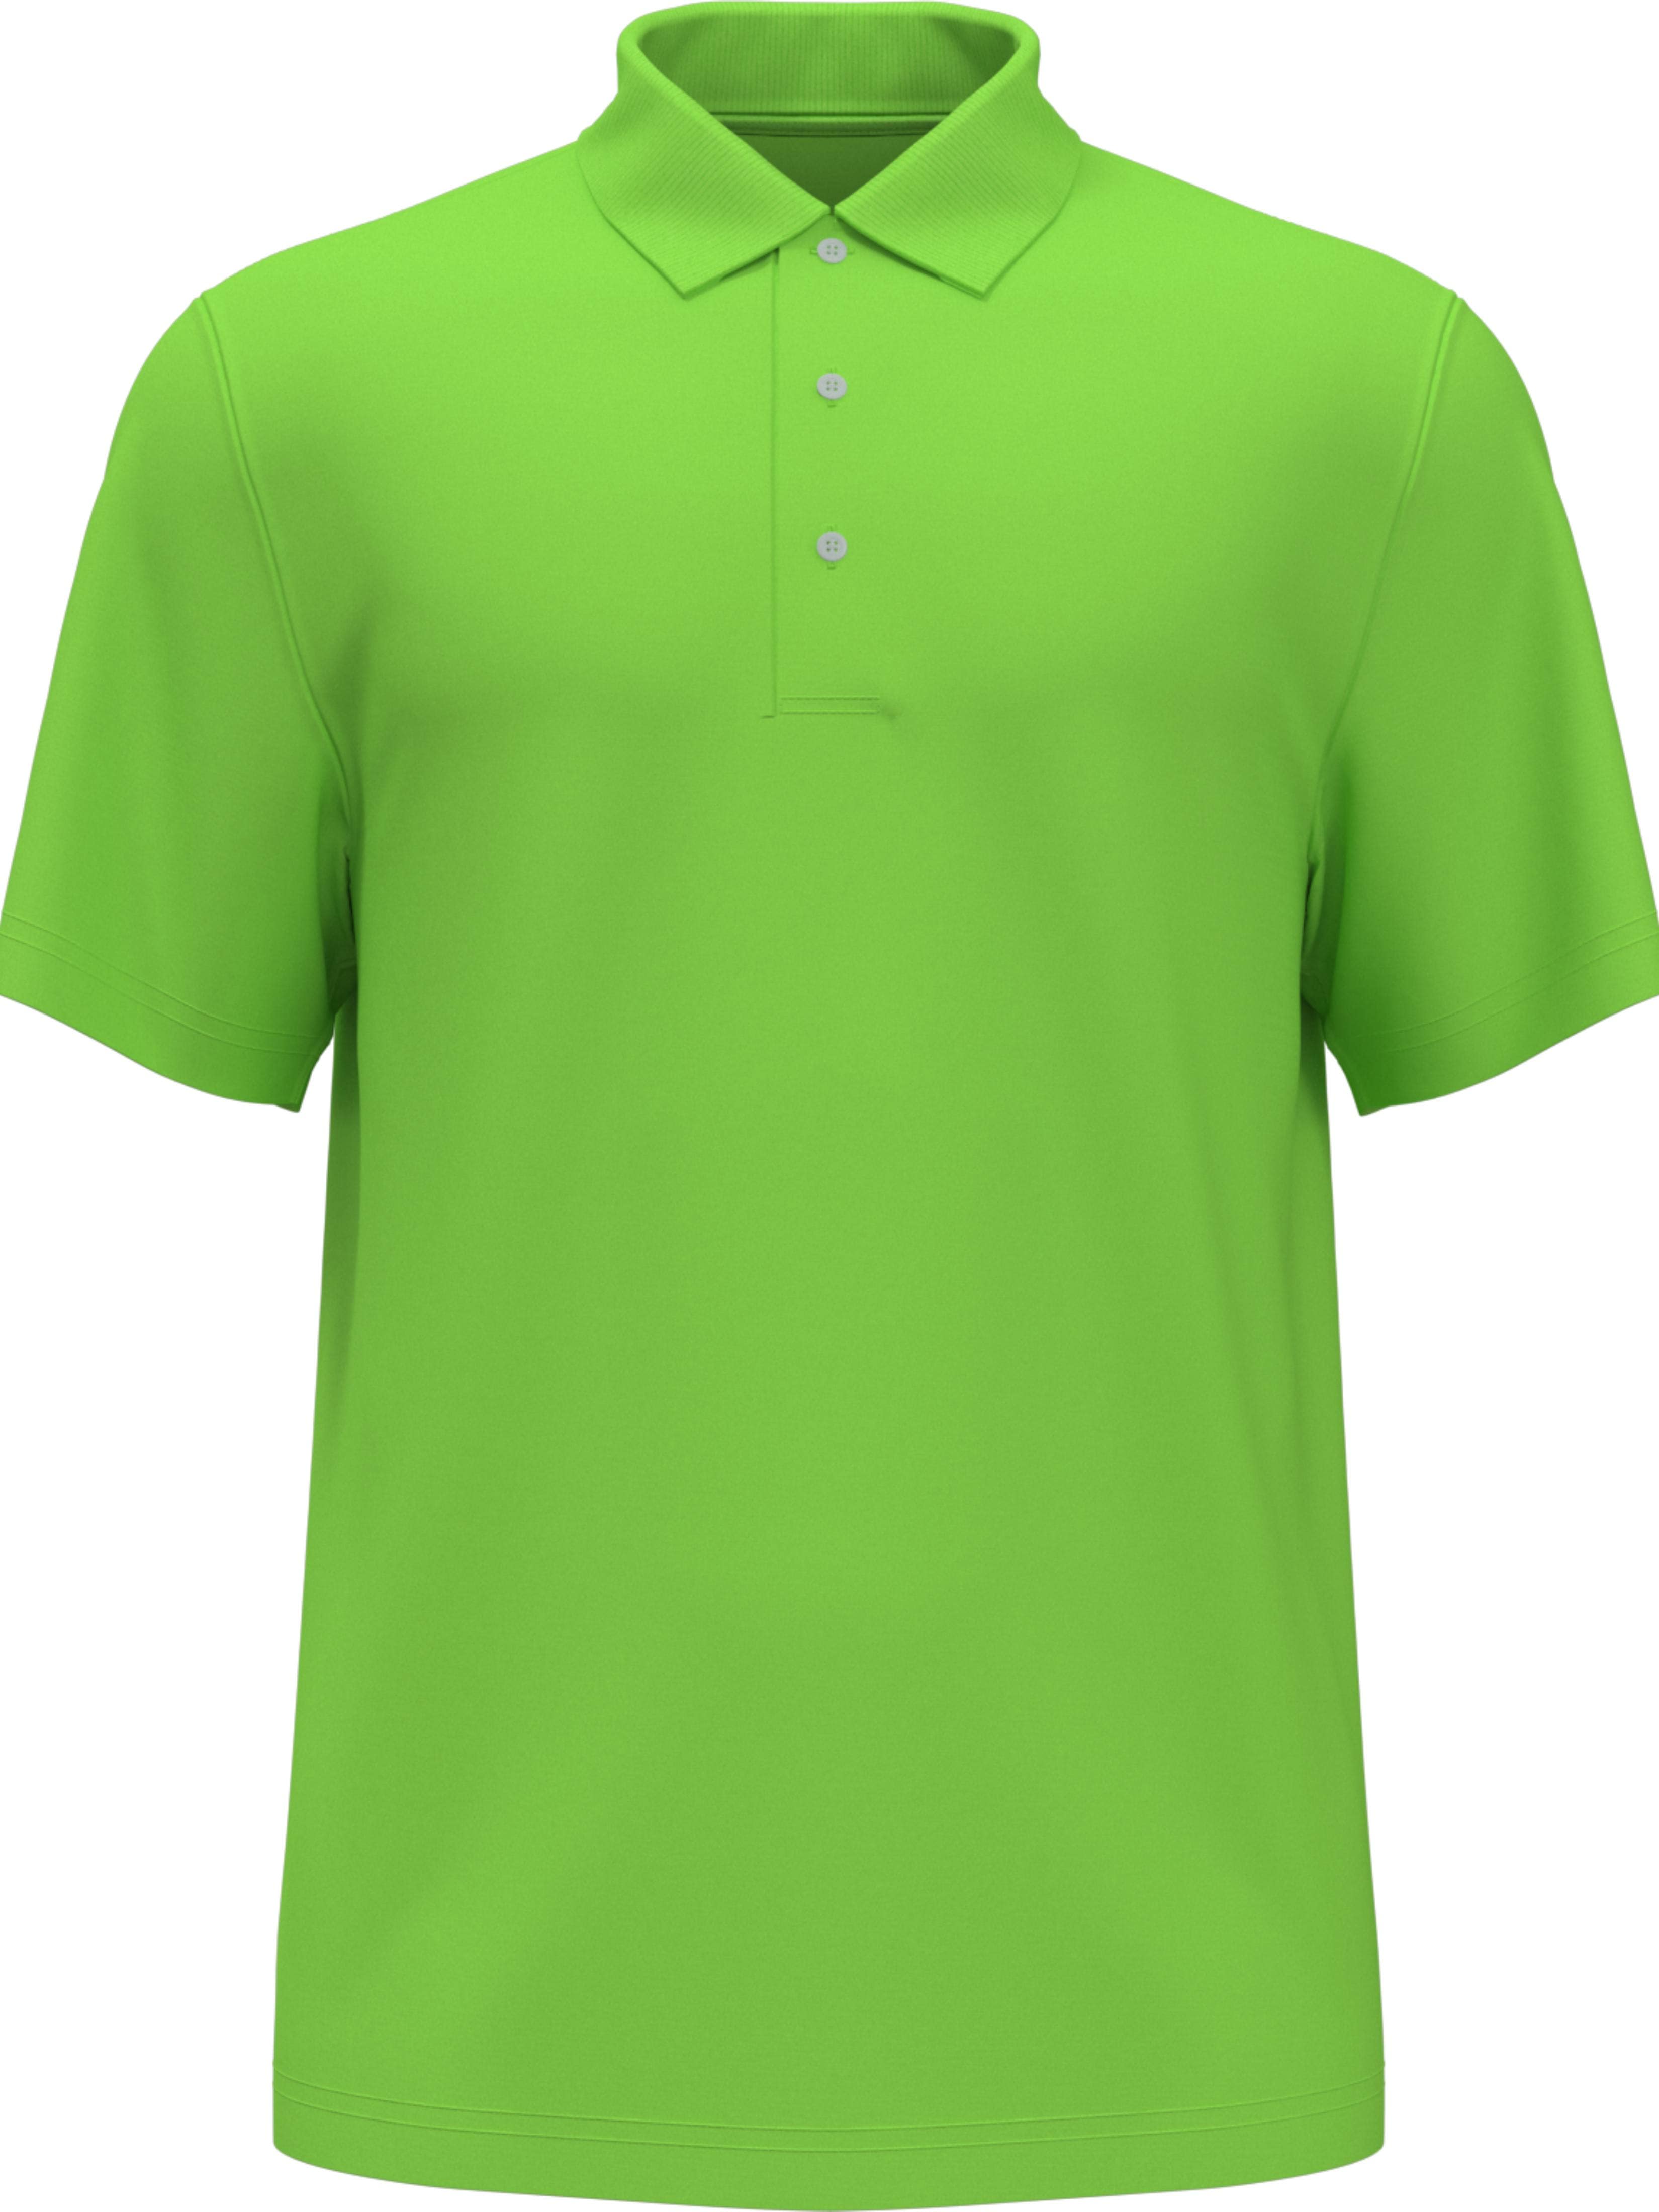 PGA TOUR Apparel Boys Short Sleeve AirFlux™ Polo Shirt, Size Large, Jasmine Green, 100% Polyester | Golf Apparel Shop